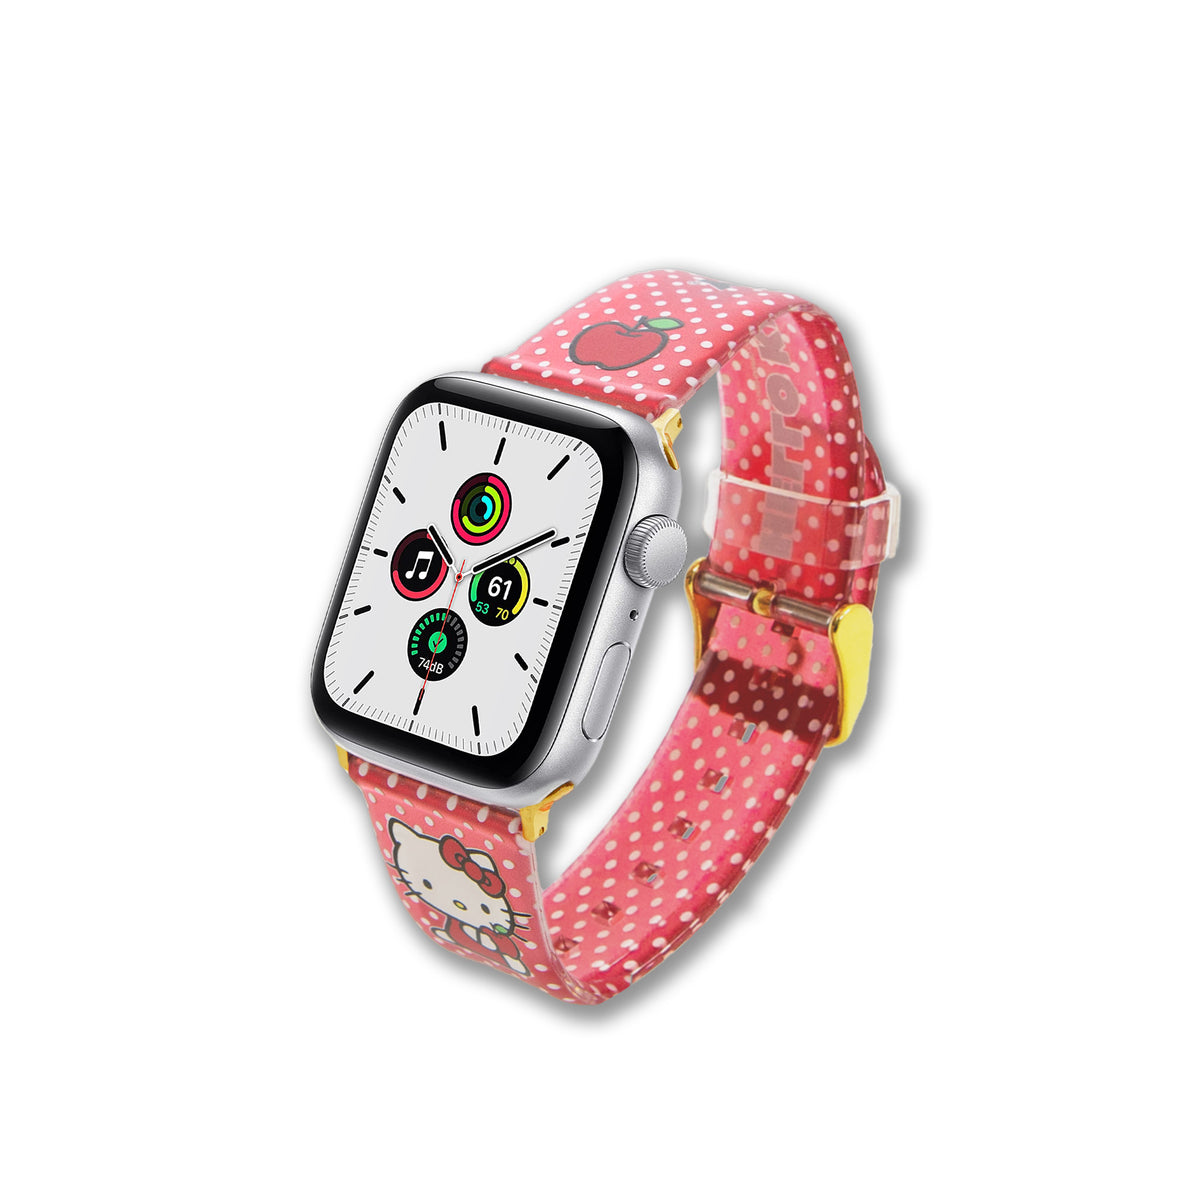 Hello Kitty x Sonix Apples Jelly Apple Watch Band Accessory BySonix Inc.   